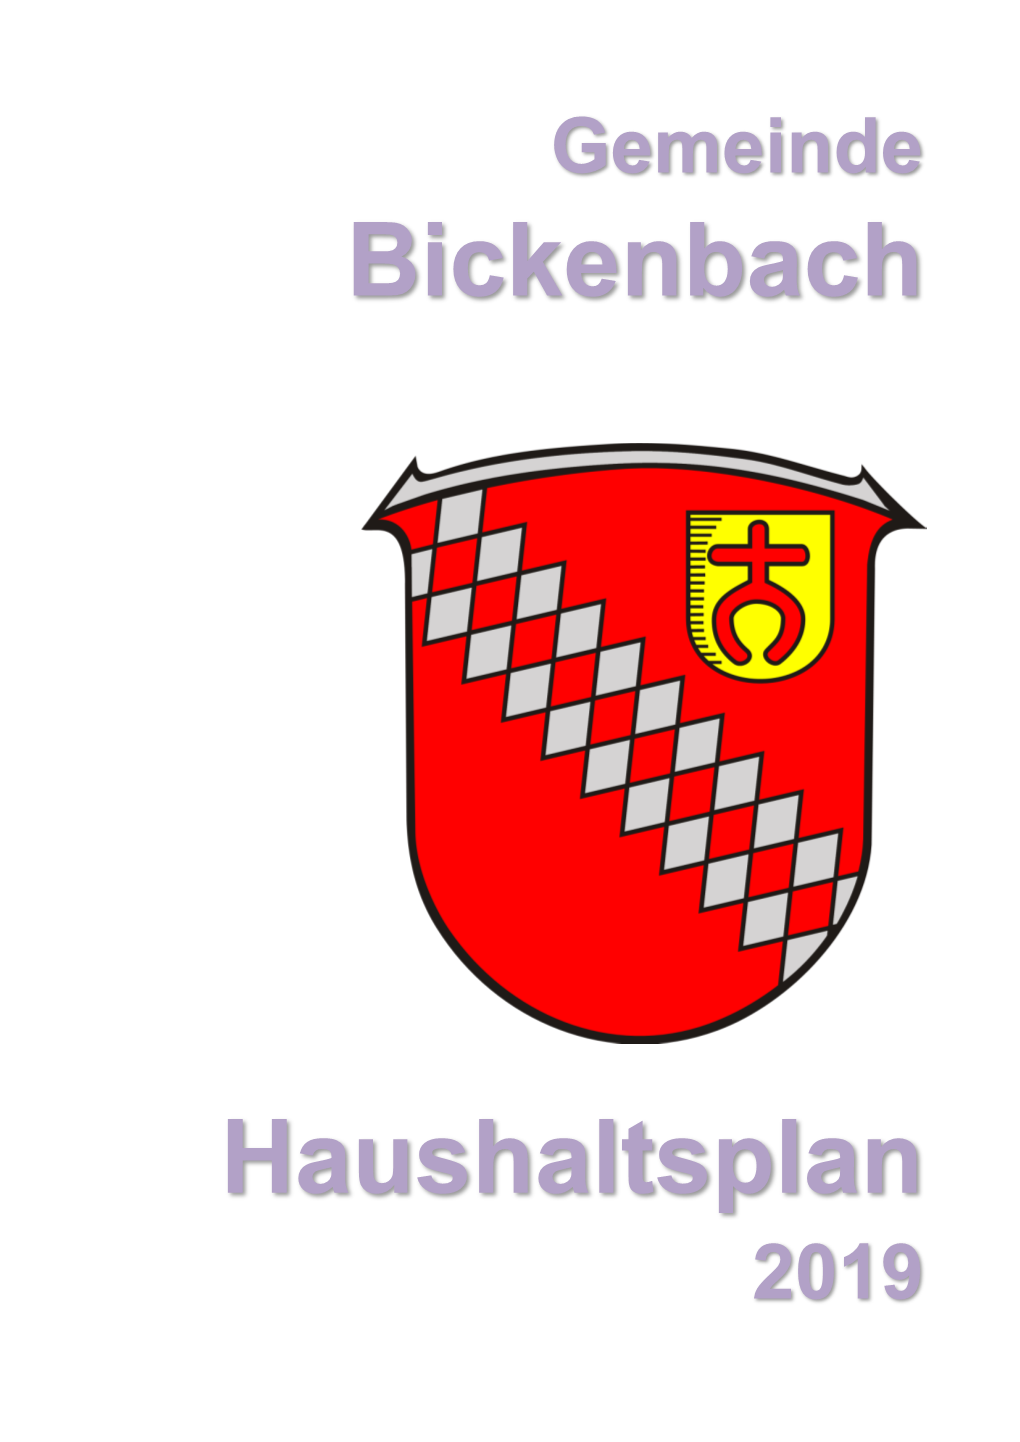 Bickenbach Haushaltsplan